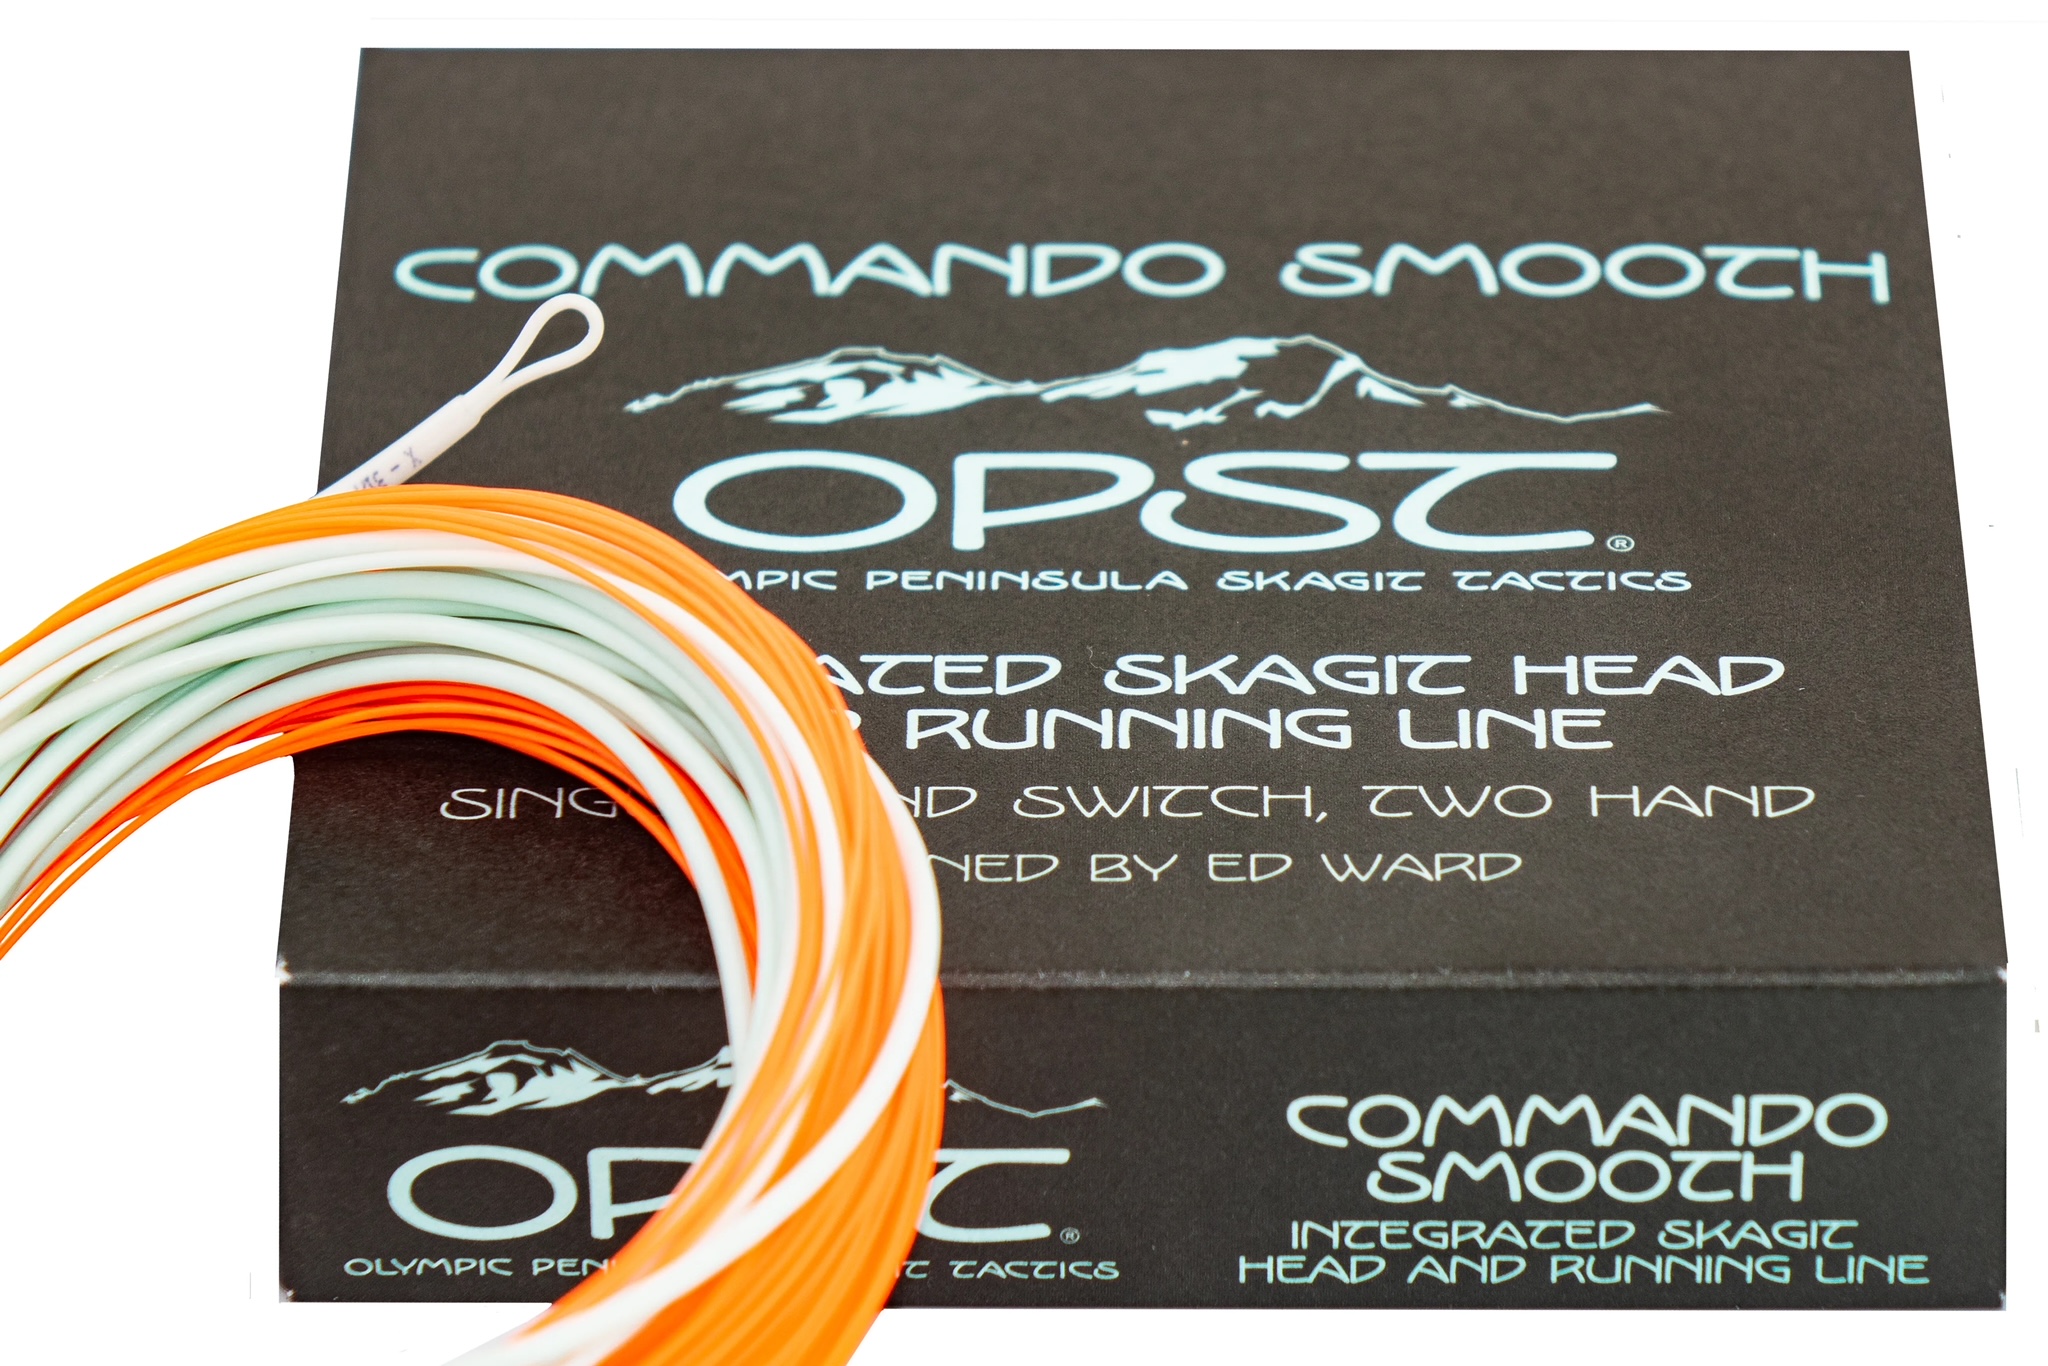 OPST (Olympic Peninsula Skagit Tactics) Commando Smooth